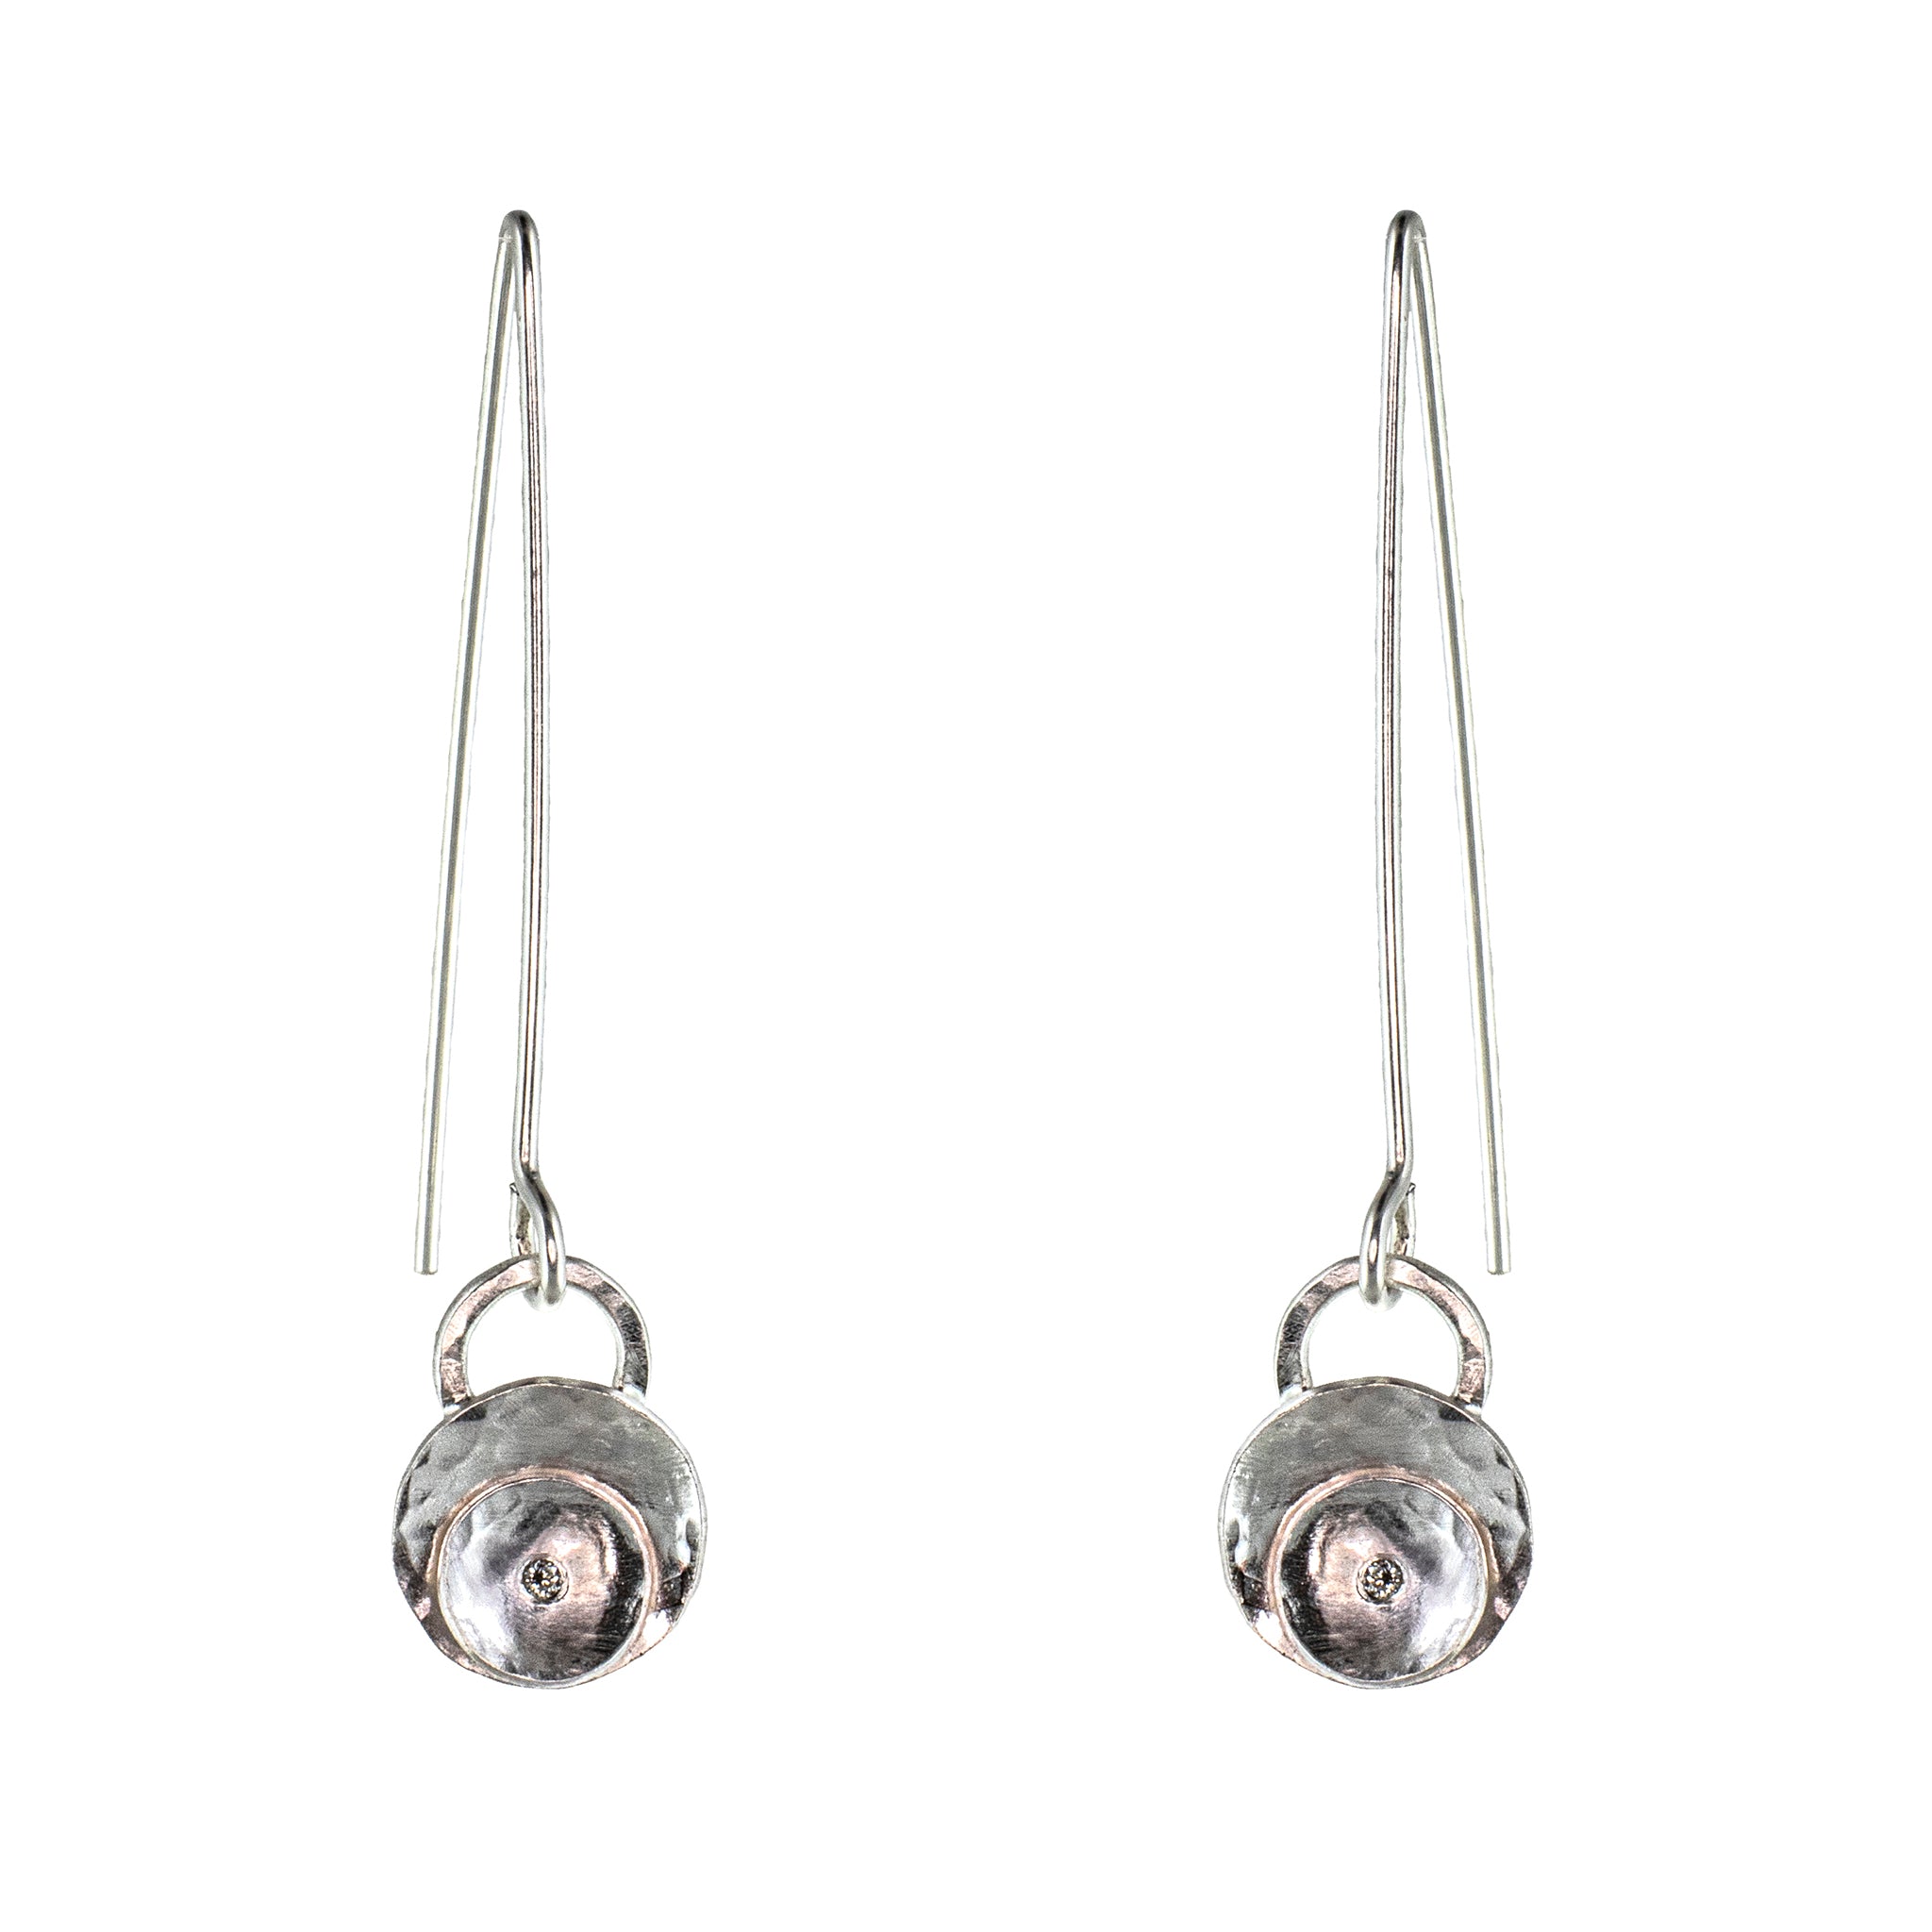 sterling silver leaf threader earrings with diamonds by eko jewelry design, Weslia